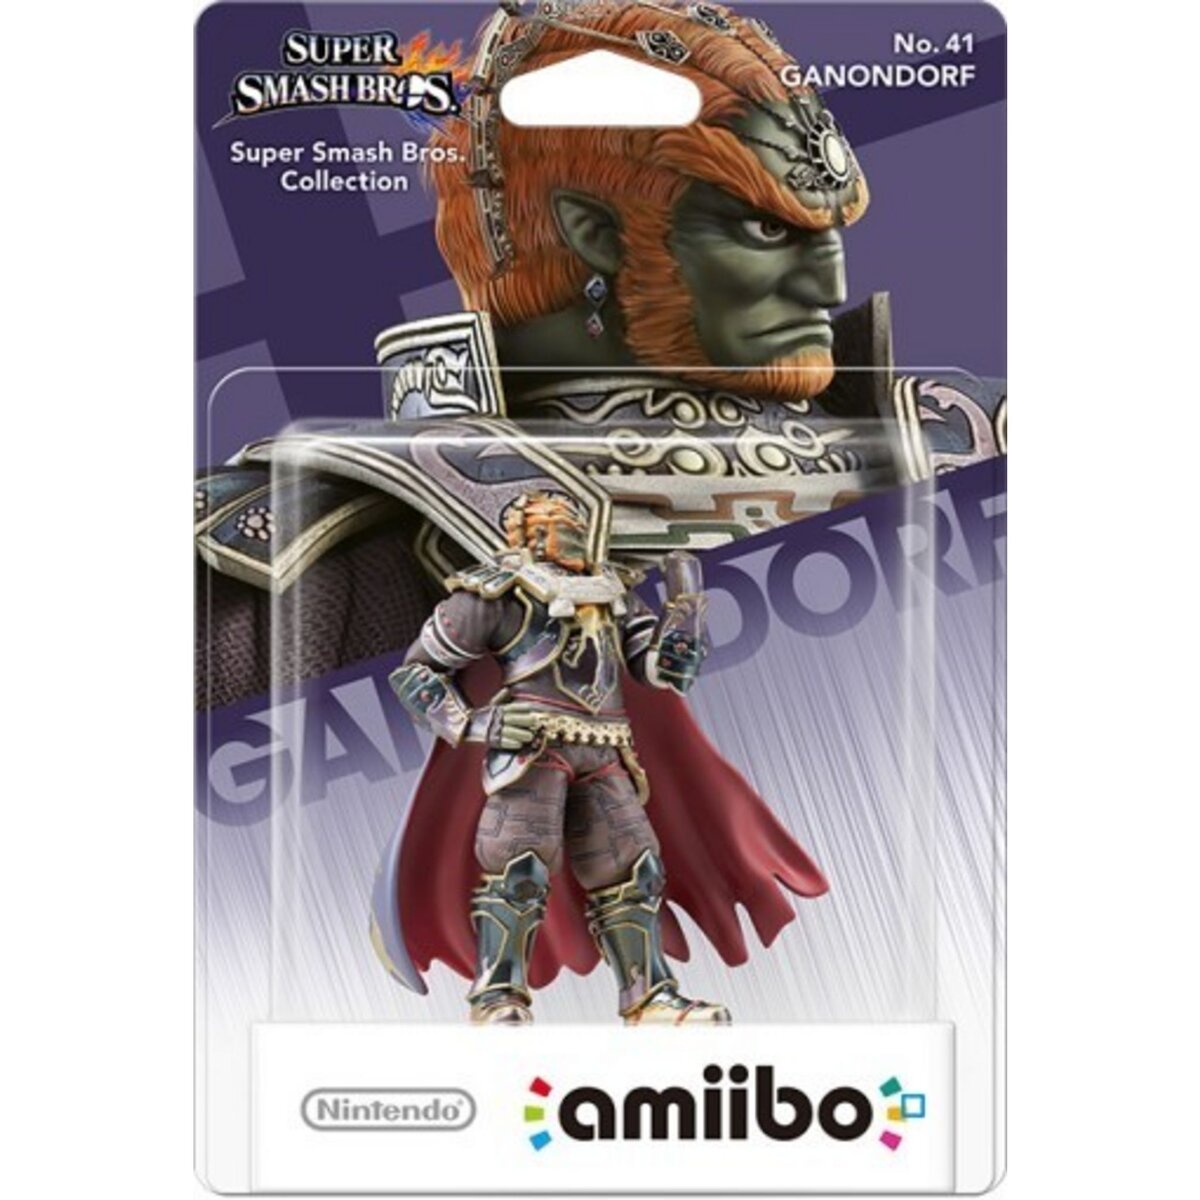 Ganondorf - Figurine Amiibo